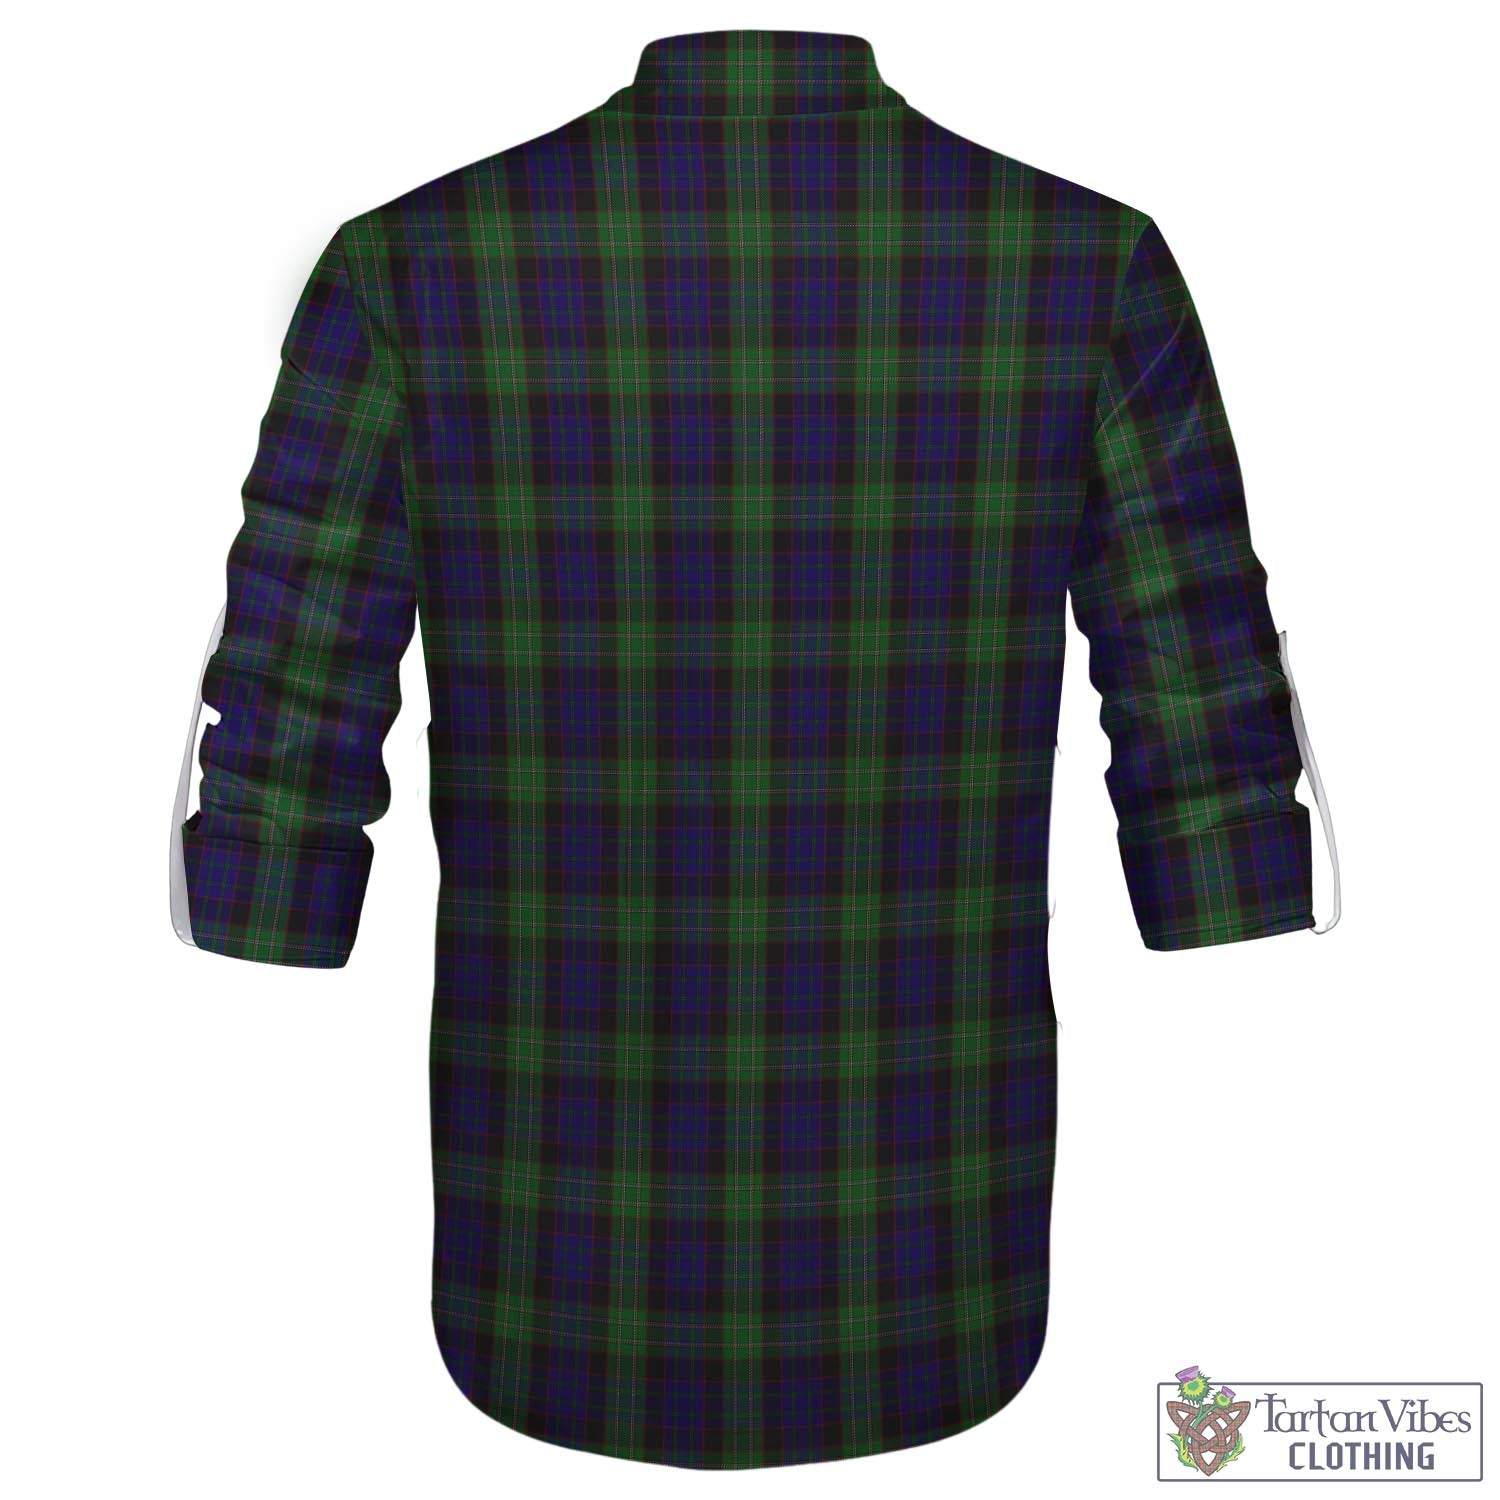 Tartan Vibes Clothing Nicolson Green Hunting Tartan Men's Scottish Traditional Jacobite Ghillie Kilt Shirt with Family Crest